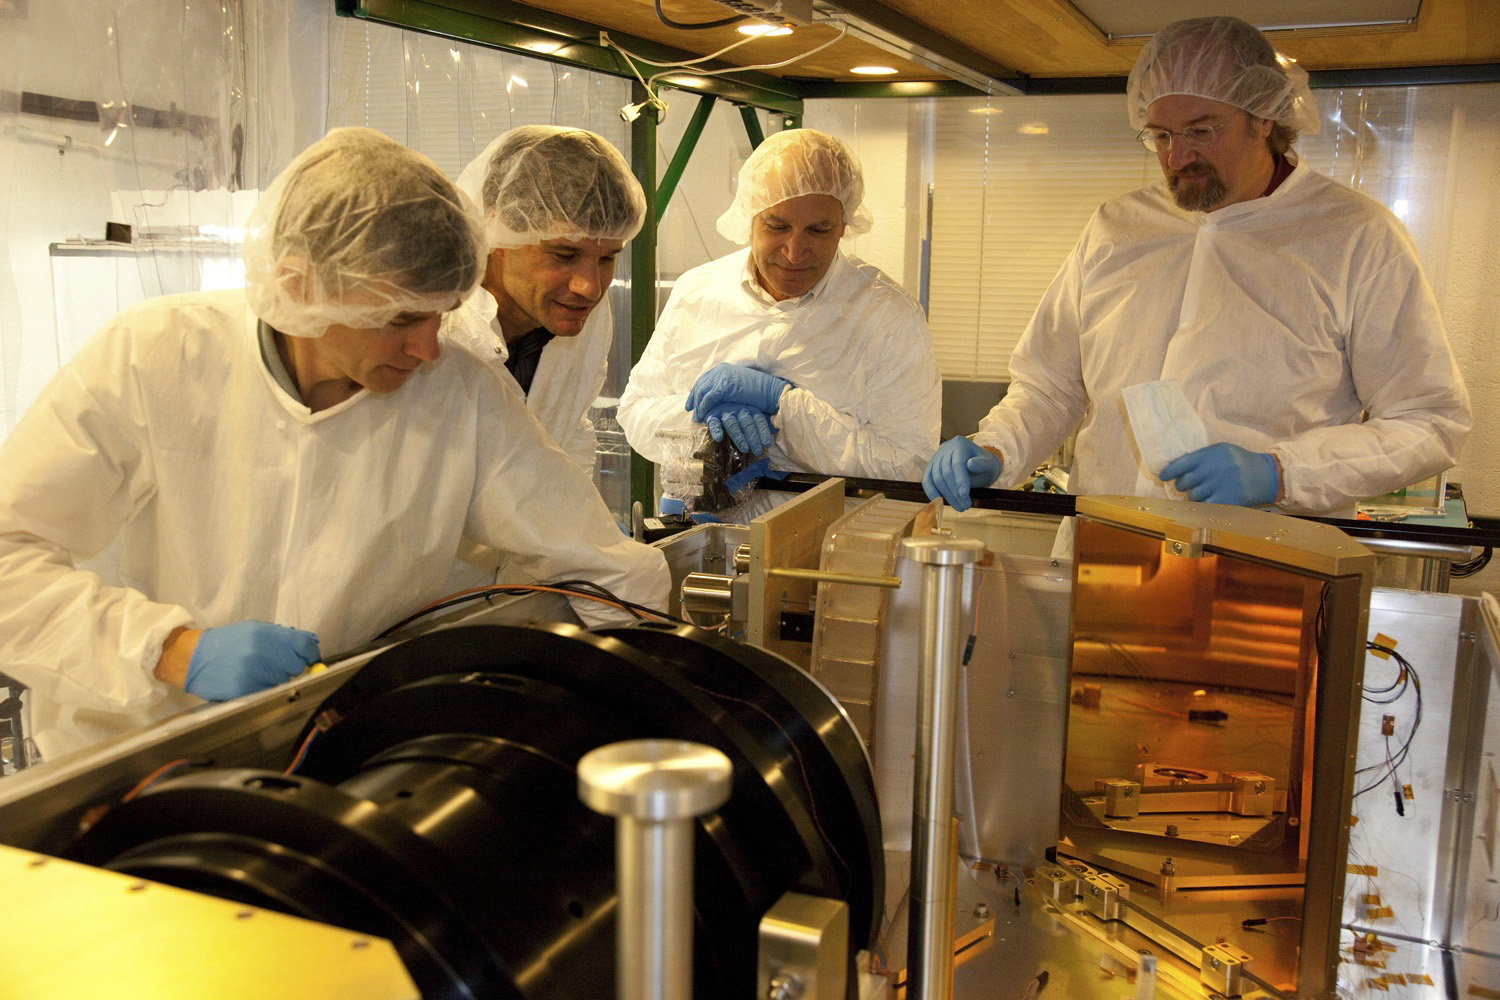  Mike Skrutskie, John Wilson, Fred Hearty and Steven Majewski working in a lab